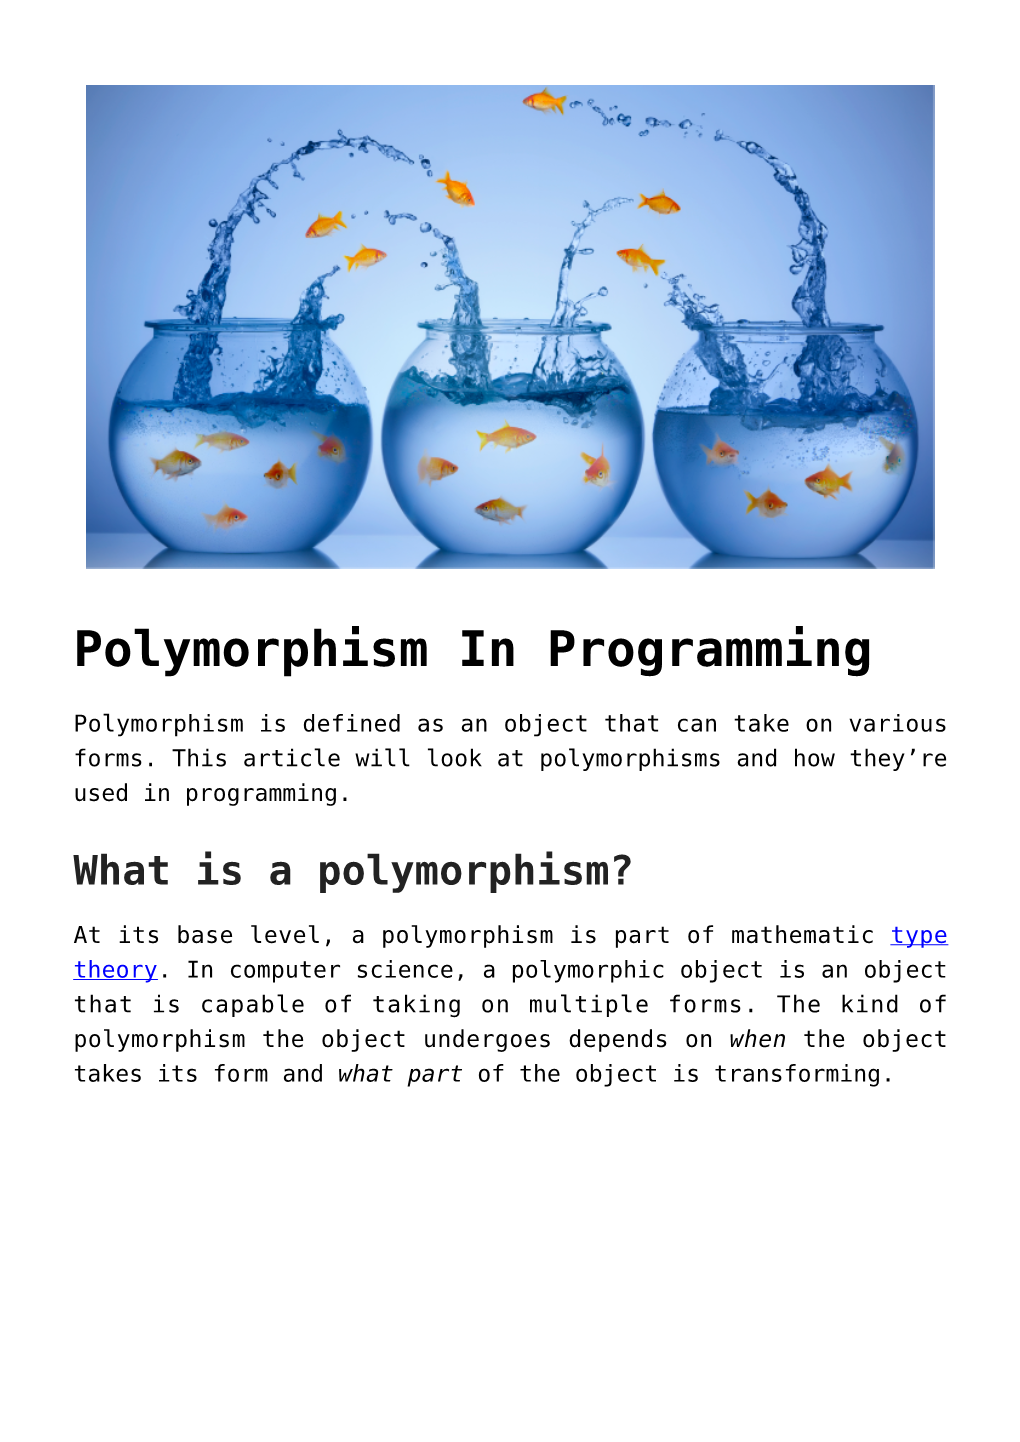 Polymorphism in Programming